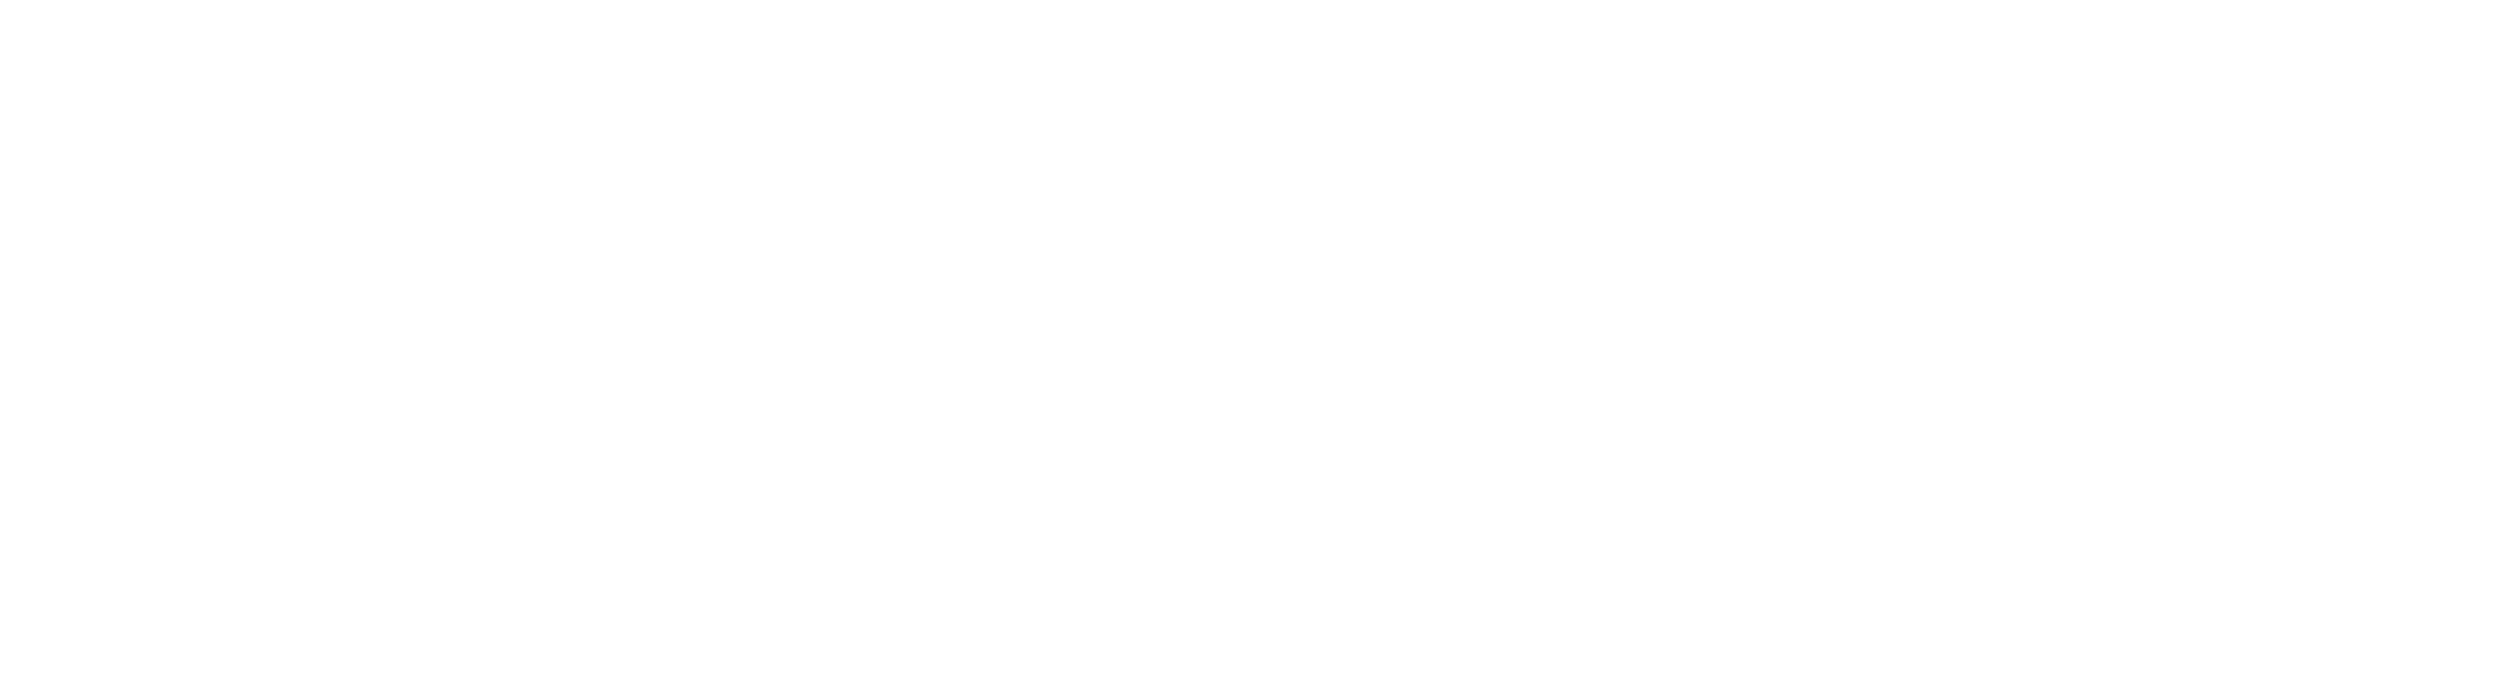 PechaKucha Night Asheville